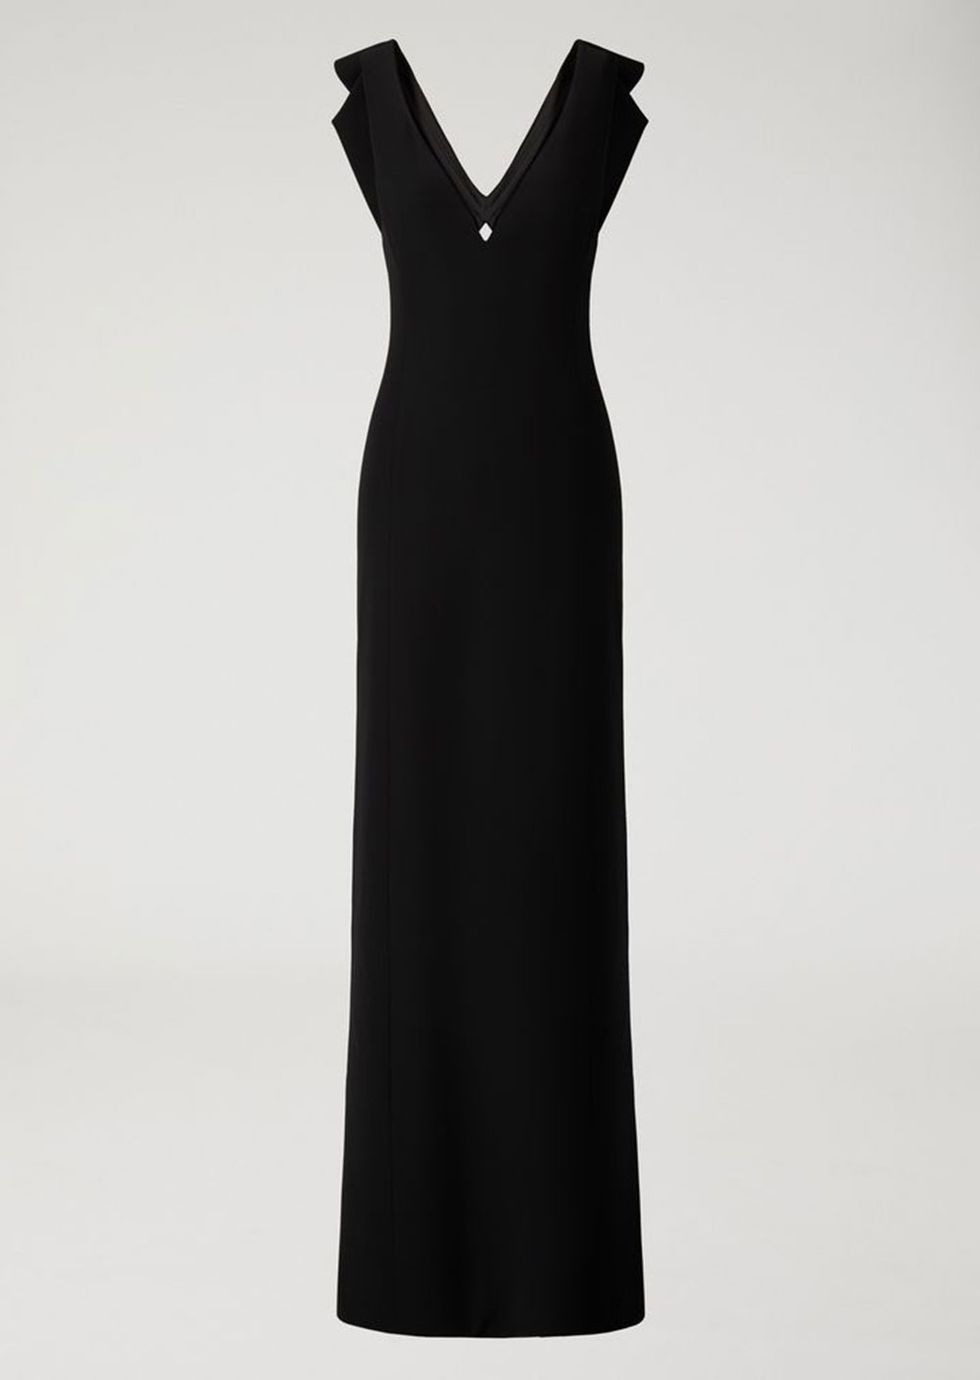 Clothing, Dress, Day dress, Black, Little black dress, Cocktail dress, Neck, Formal wear, One-piece garment, Sleeve, 